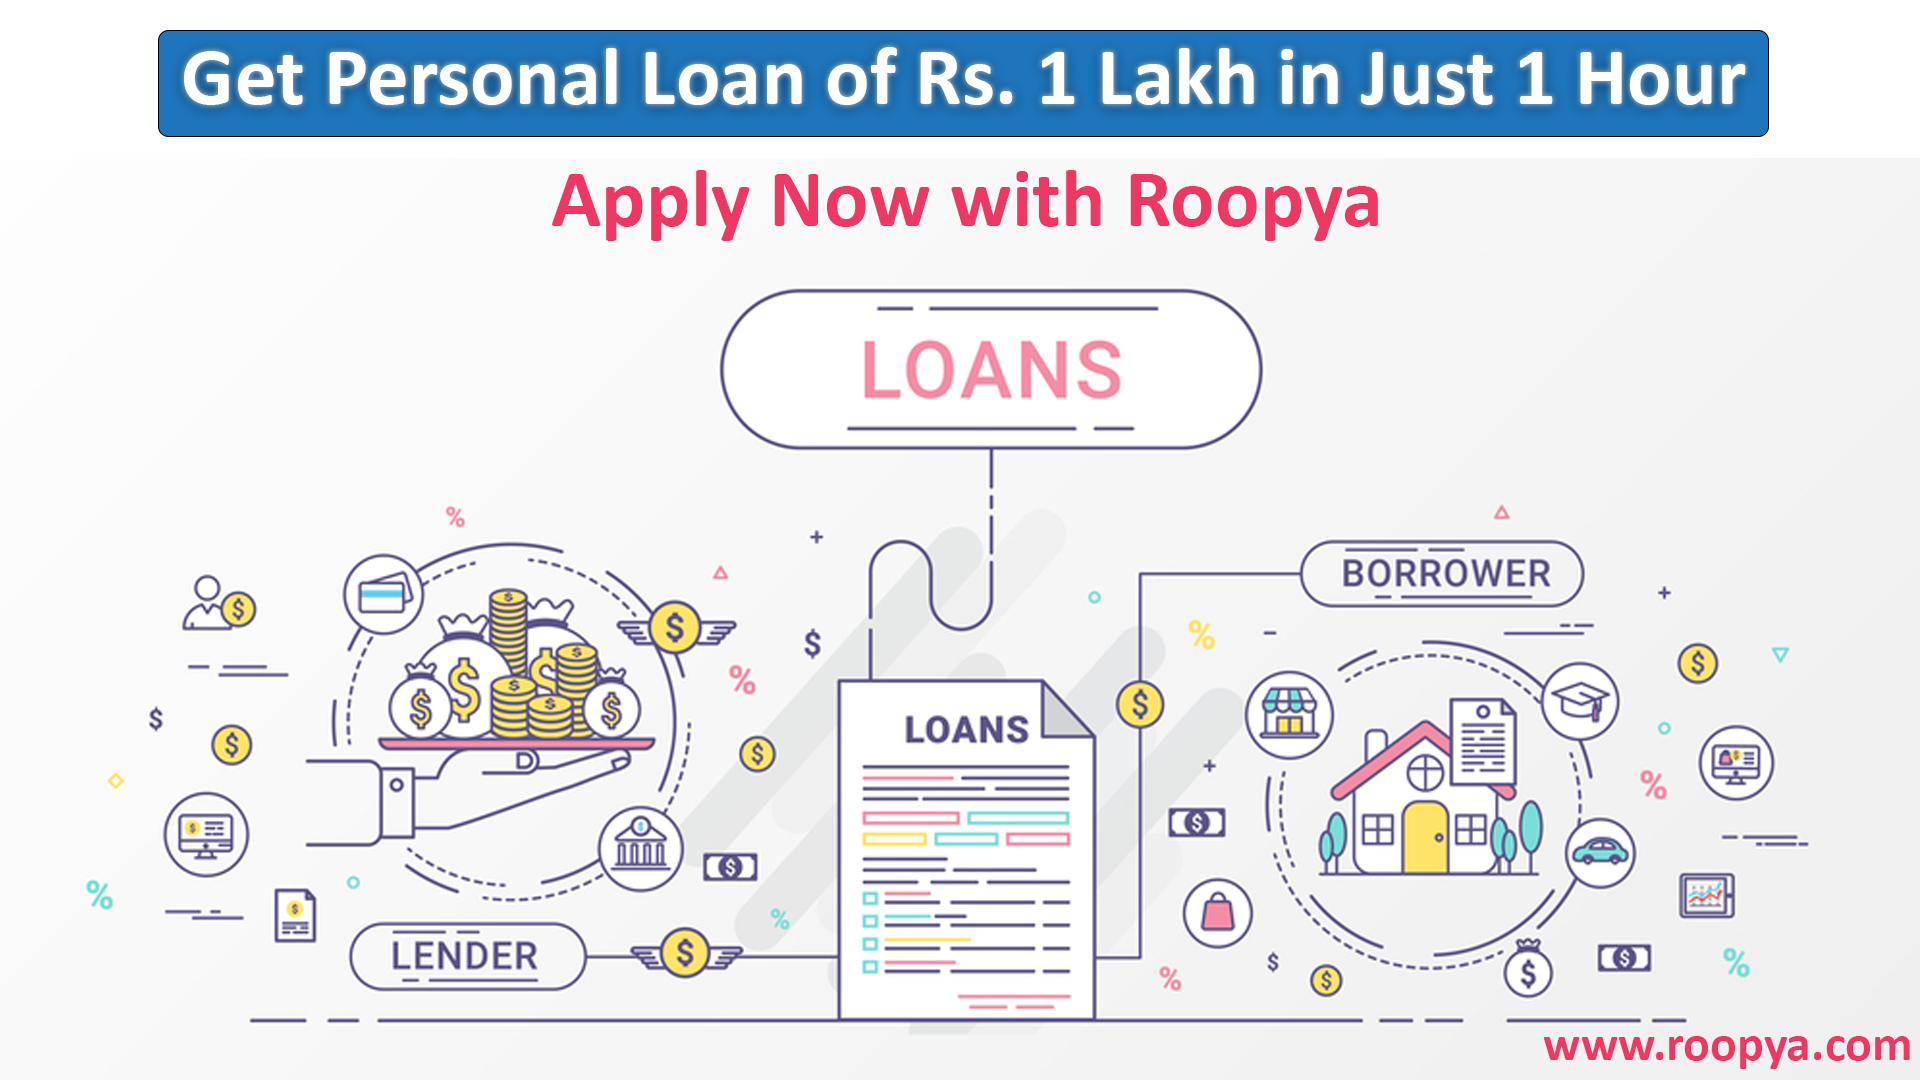 i want 1 lakh rupees loan urgently